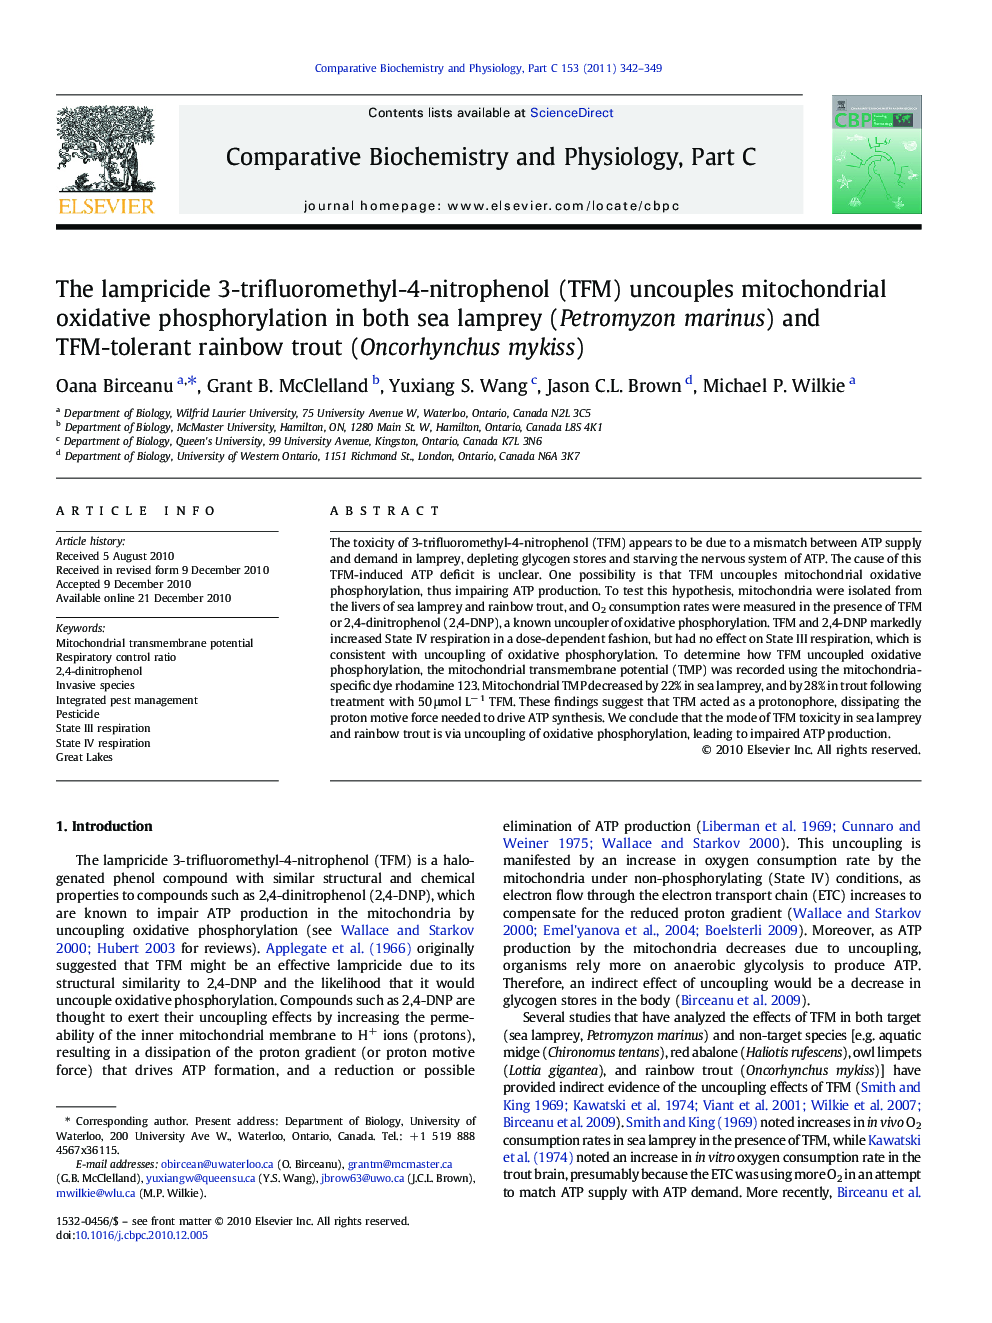 The lampricide 3-trifluoromethyl-4-nitrophenol (TFM) uncouples mitochondrial oxidative phosphorylation in both sea lamprey (Petromyzon marinus) and TFM-tolerant rainbow trout (Oncorhynchus mykiss)